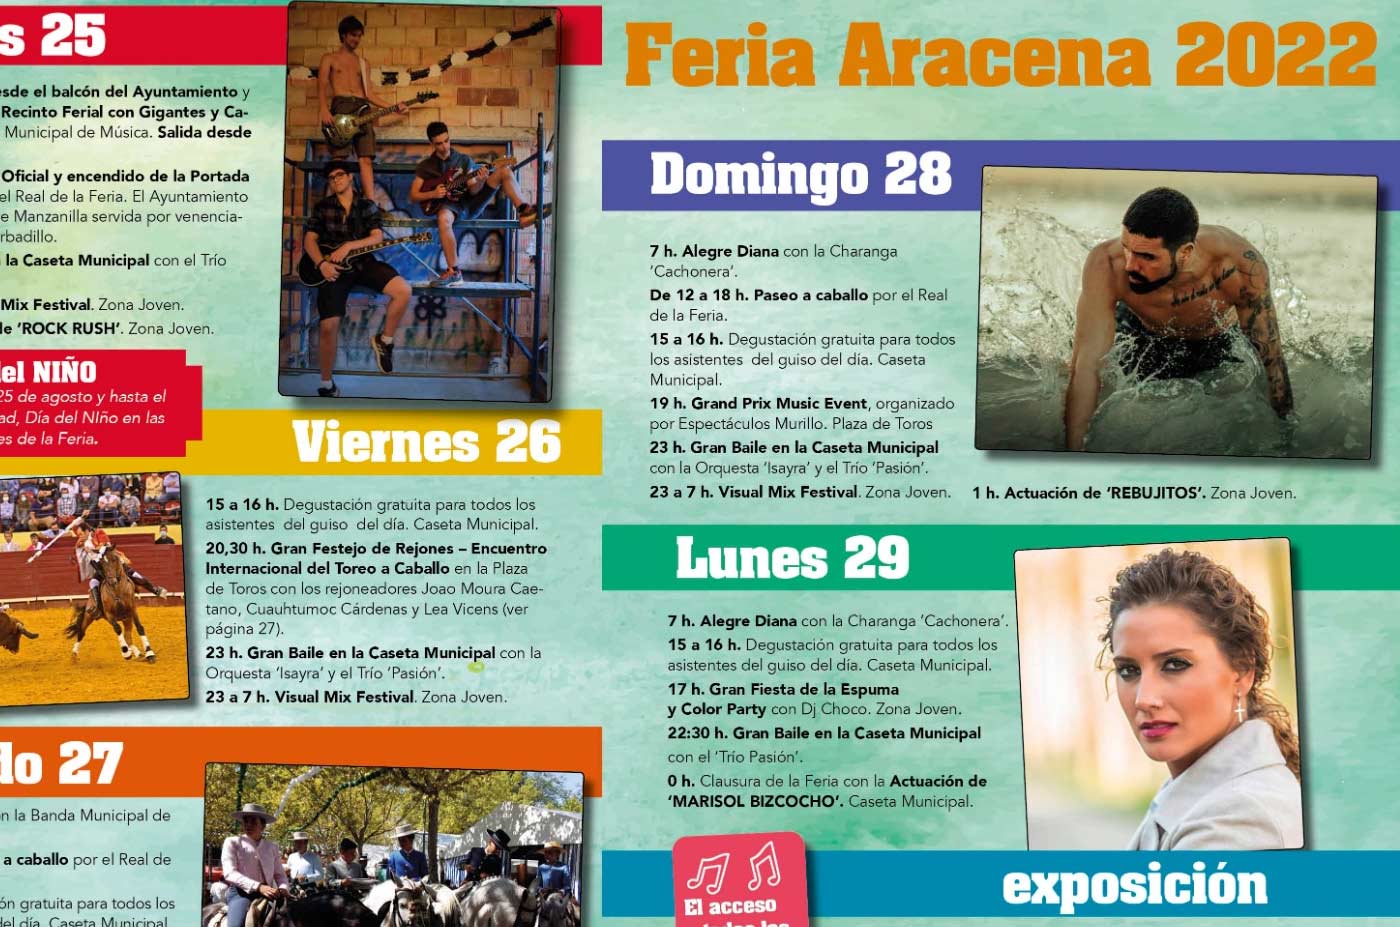 Feria de Aracena agosto 2022